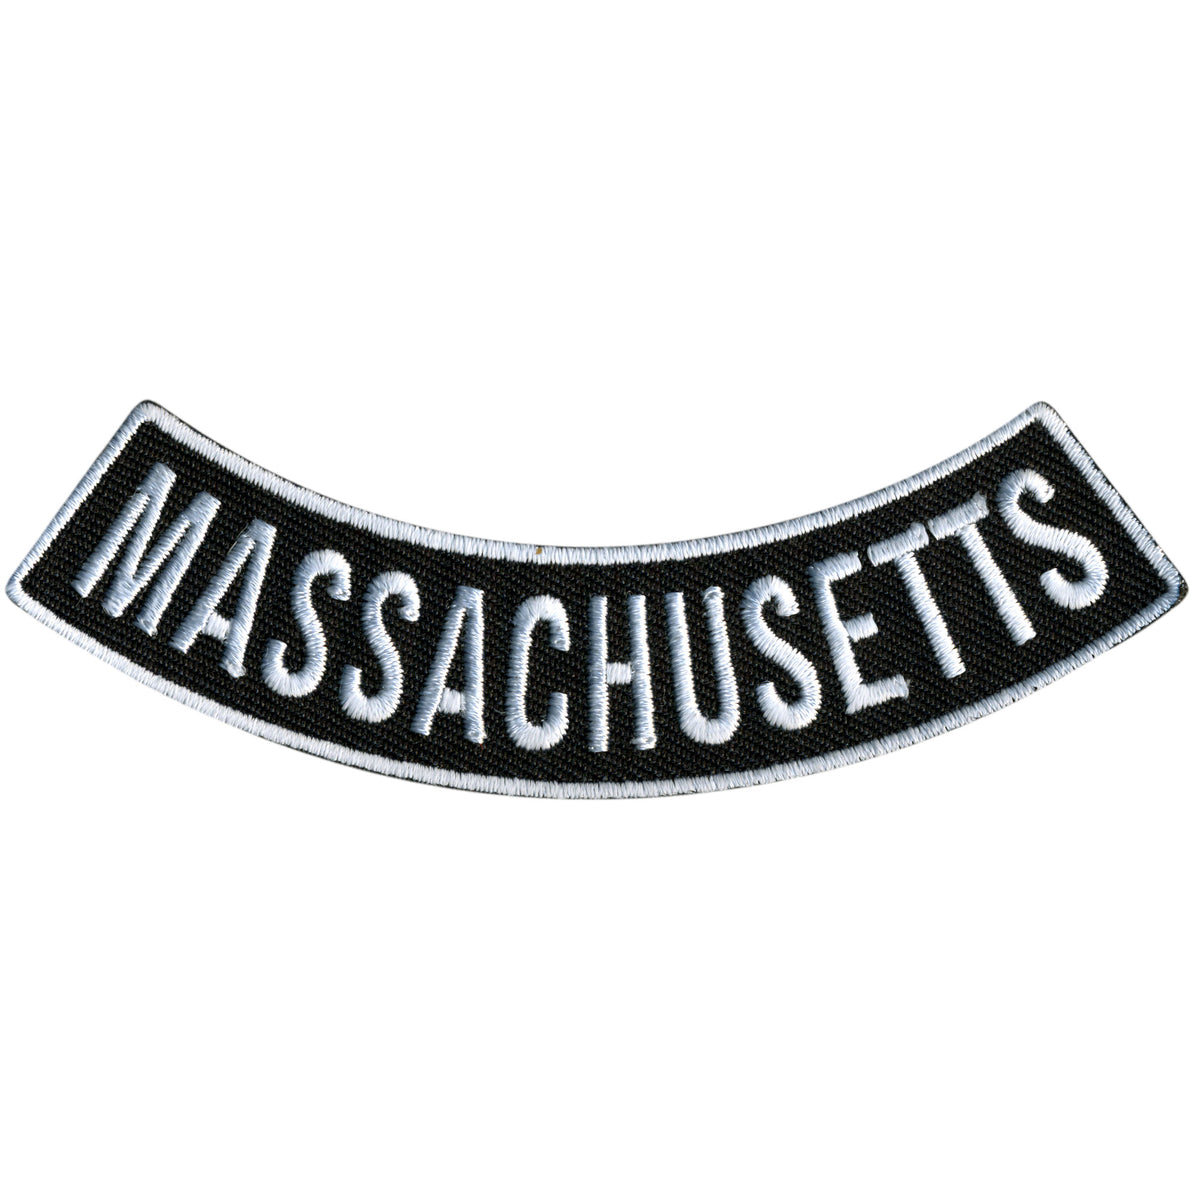 Hot Leathers Massachusetts 4” X 1” Bottom Rocker Patch